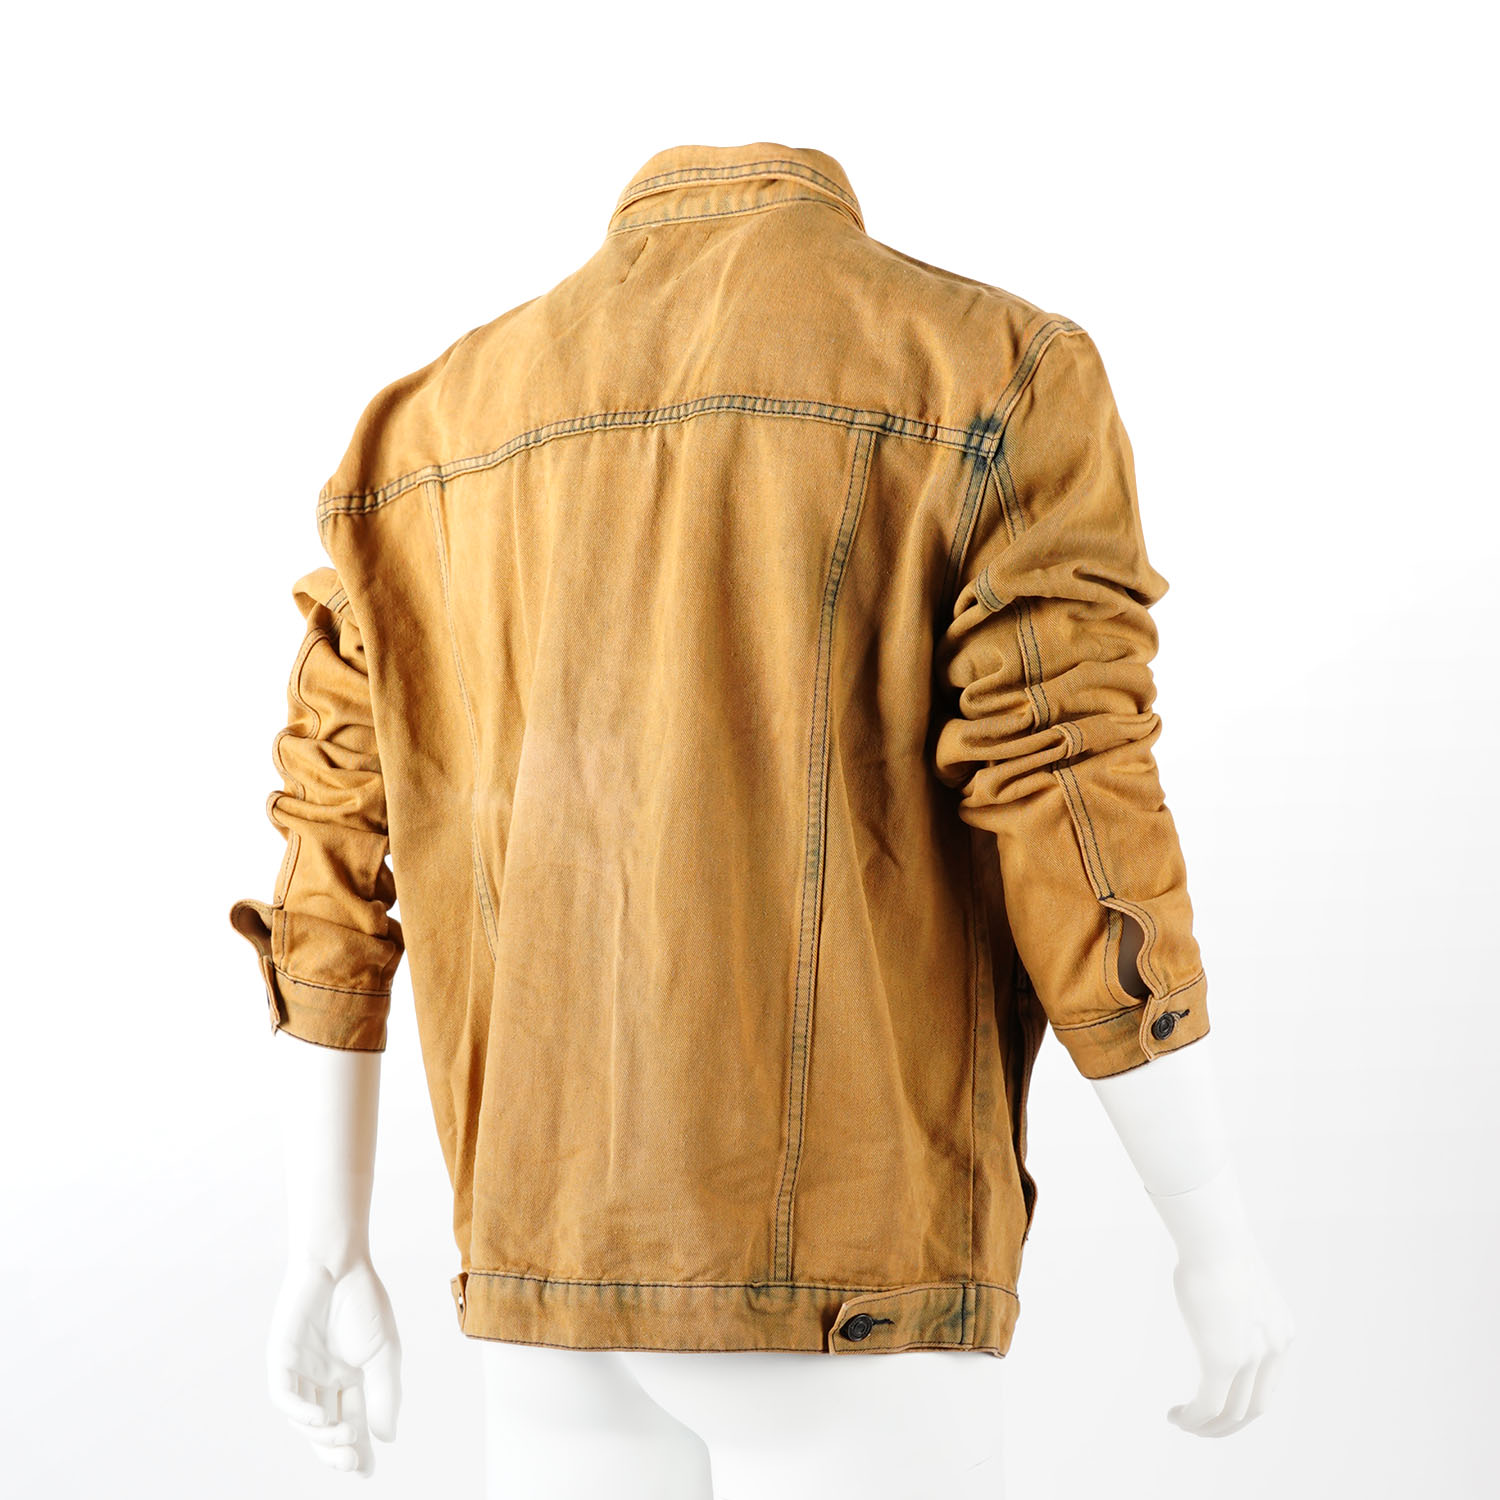 plus size jacket in stock low price safari style windproof men jacket